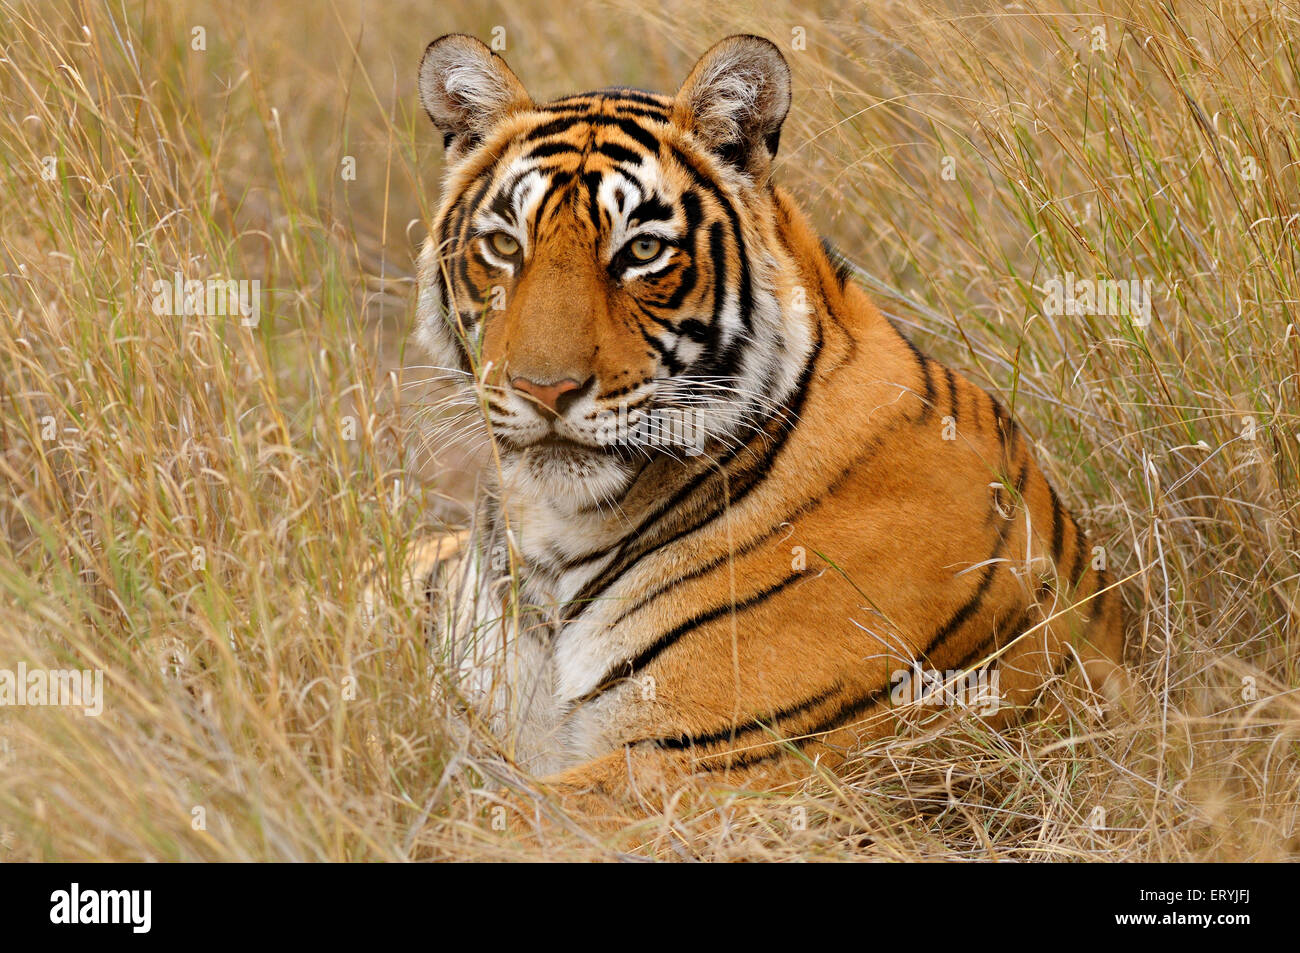 Tiger sitting in dry grass Ranthambhore National Park Wildlife Sanctuary Rajasthan India Asia indian wildlife asia asian tiger Stock Photo